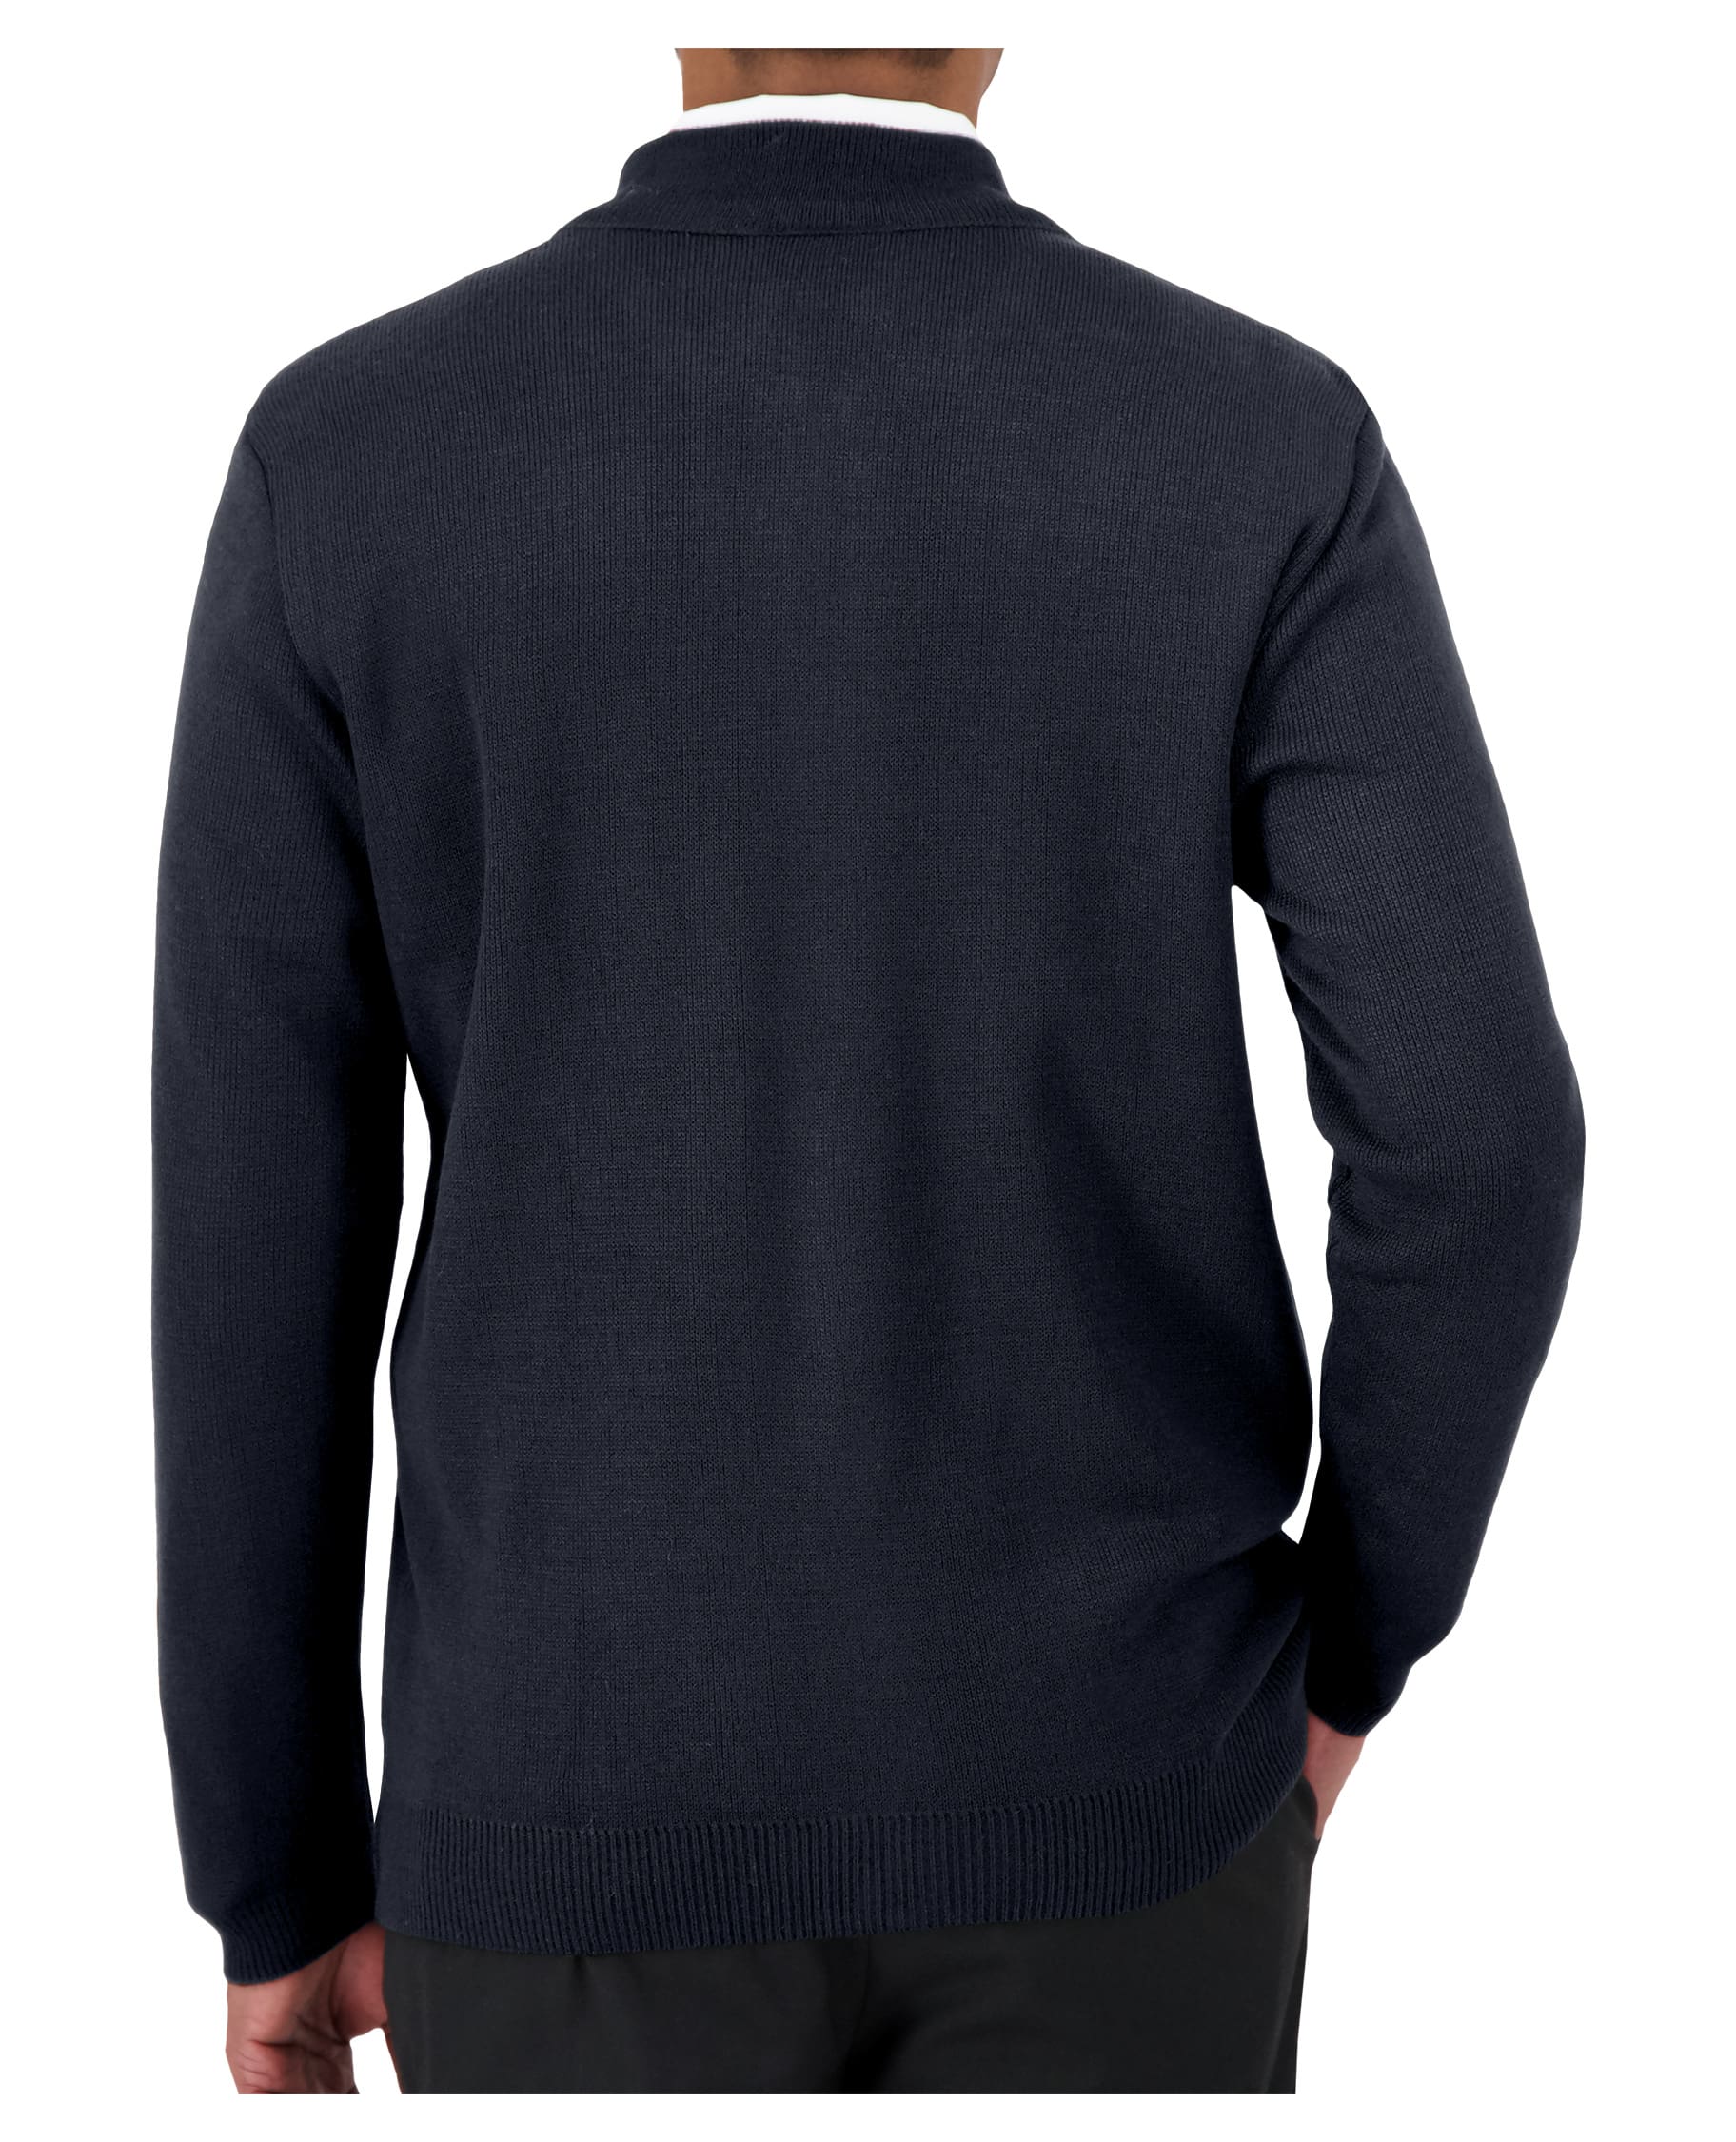 back of mock neck full zip uniform sweater